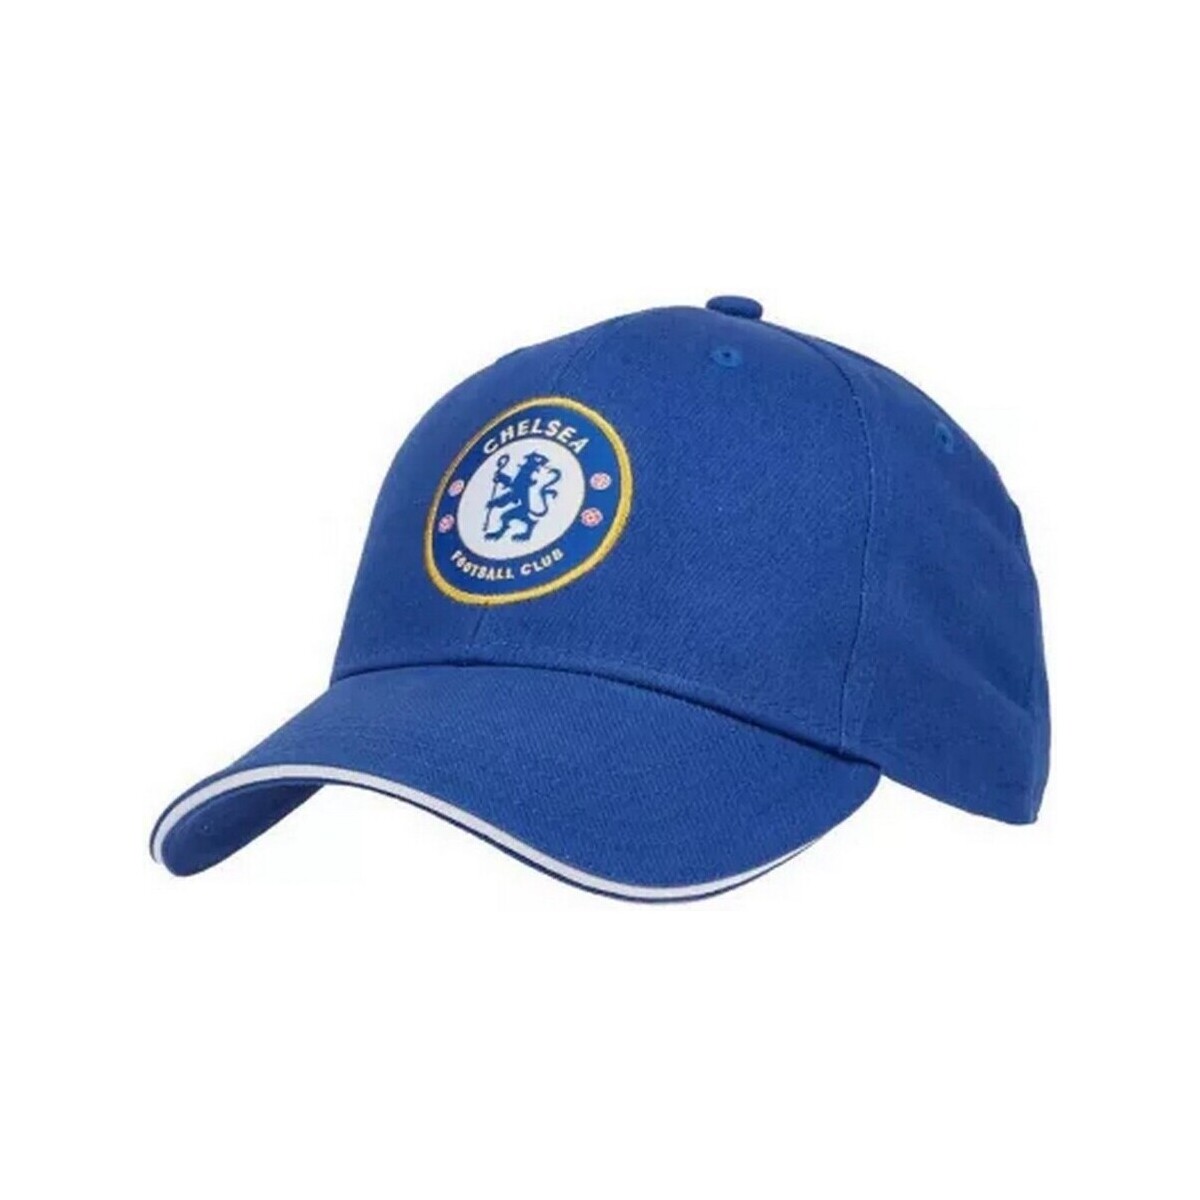 Accessori Cappellini Chelsea Fc BS3879 Blu